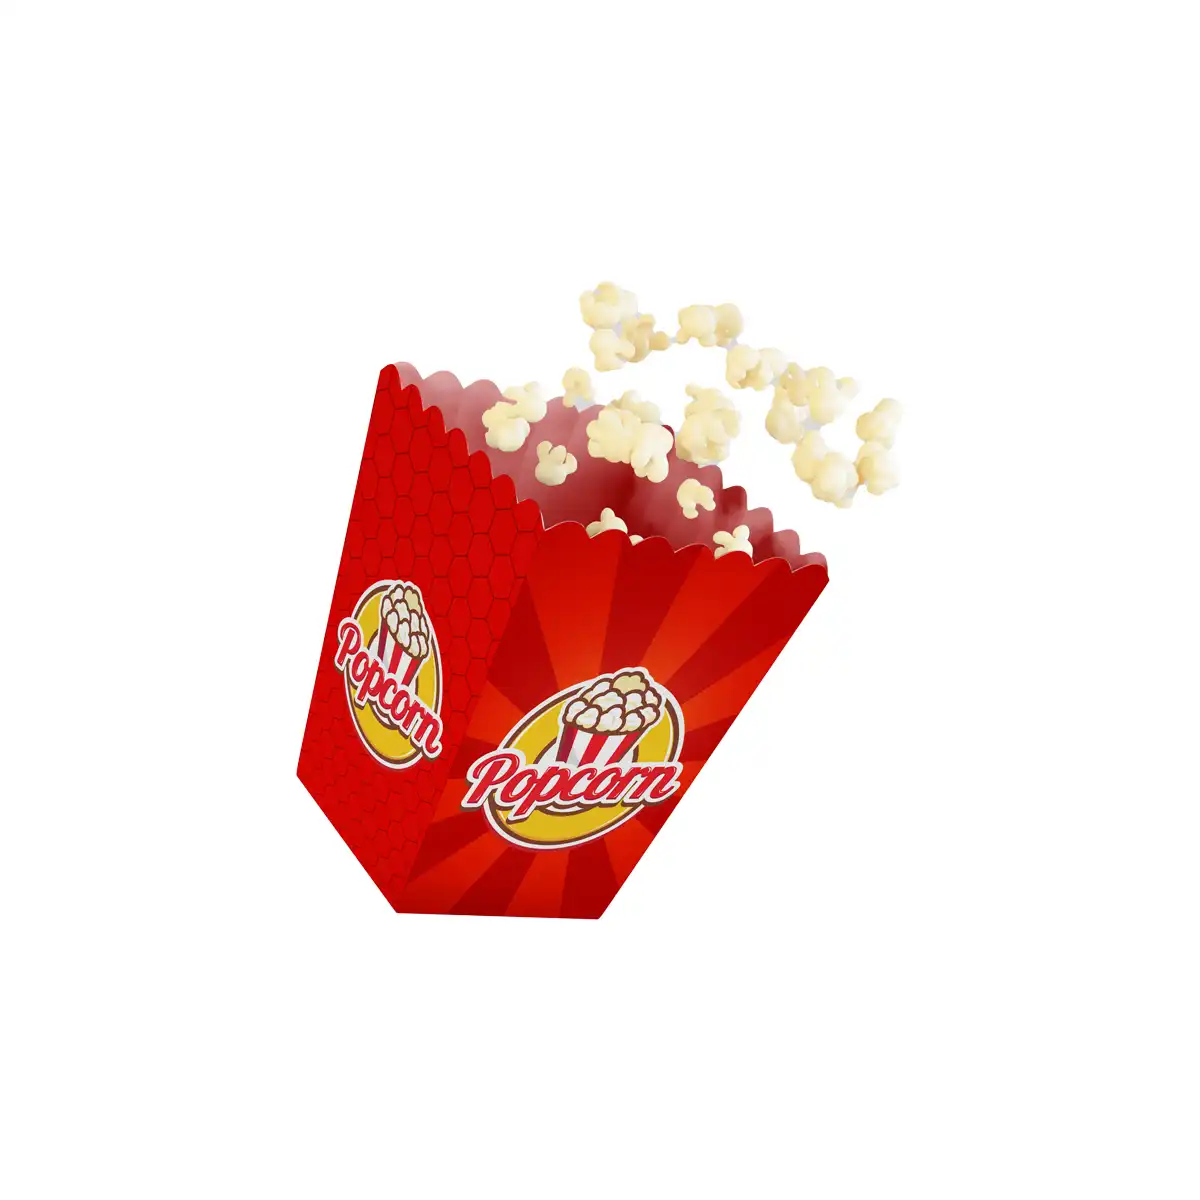 Get Custom Printed Popcorn Boxes